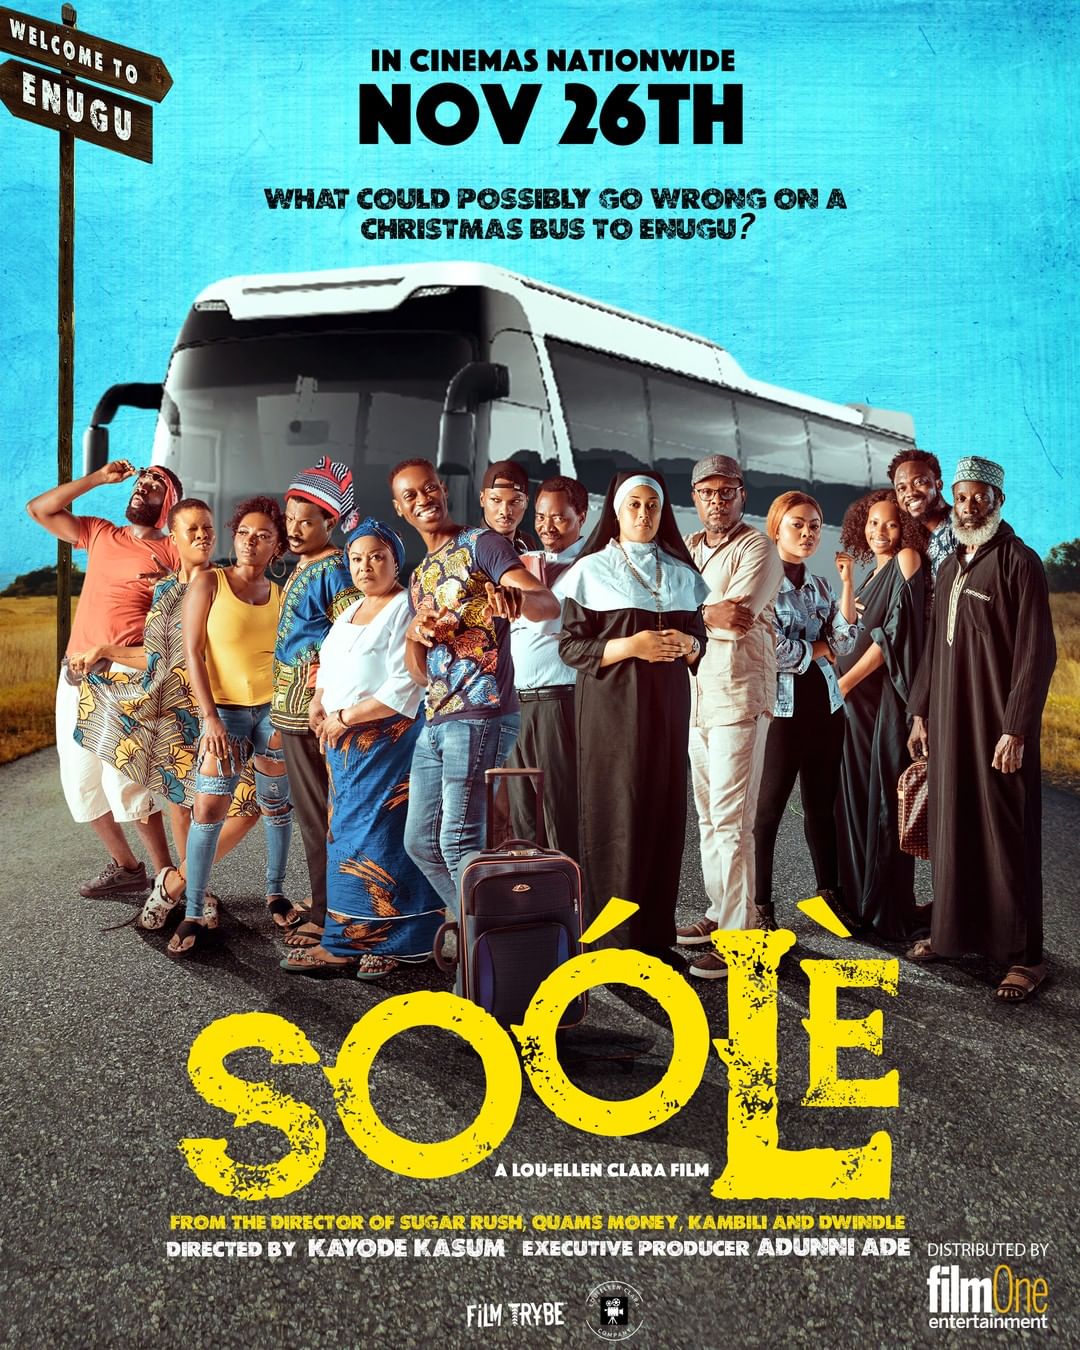 250401186 3060002660912359 2063454013369697935 n - EXCLU: Soole is Adunni Ade’s Grand Entrance as Box Office Lead & Film Executive